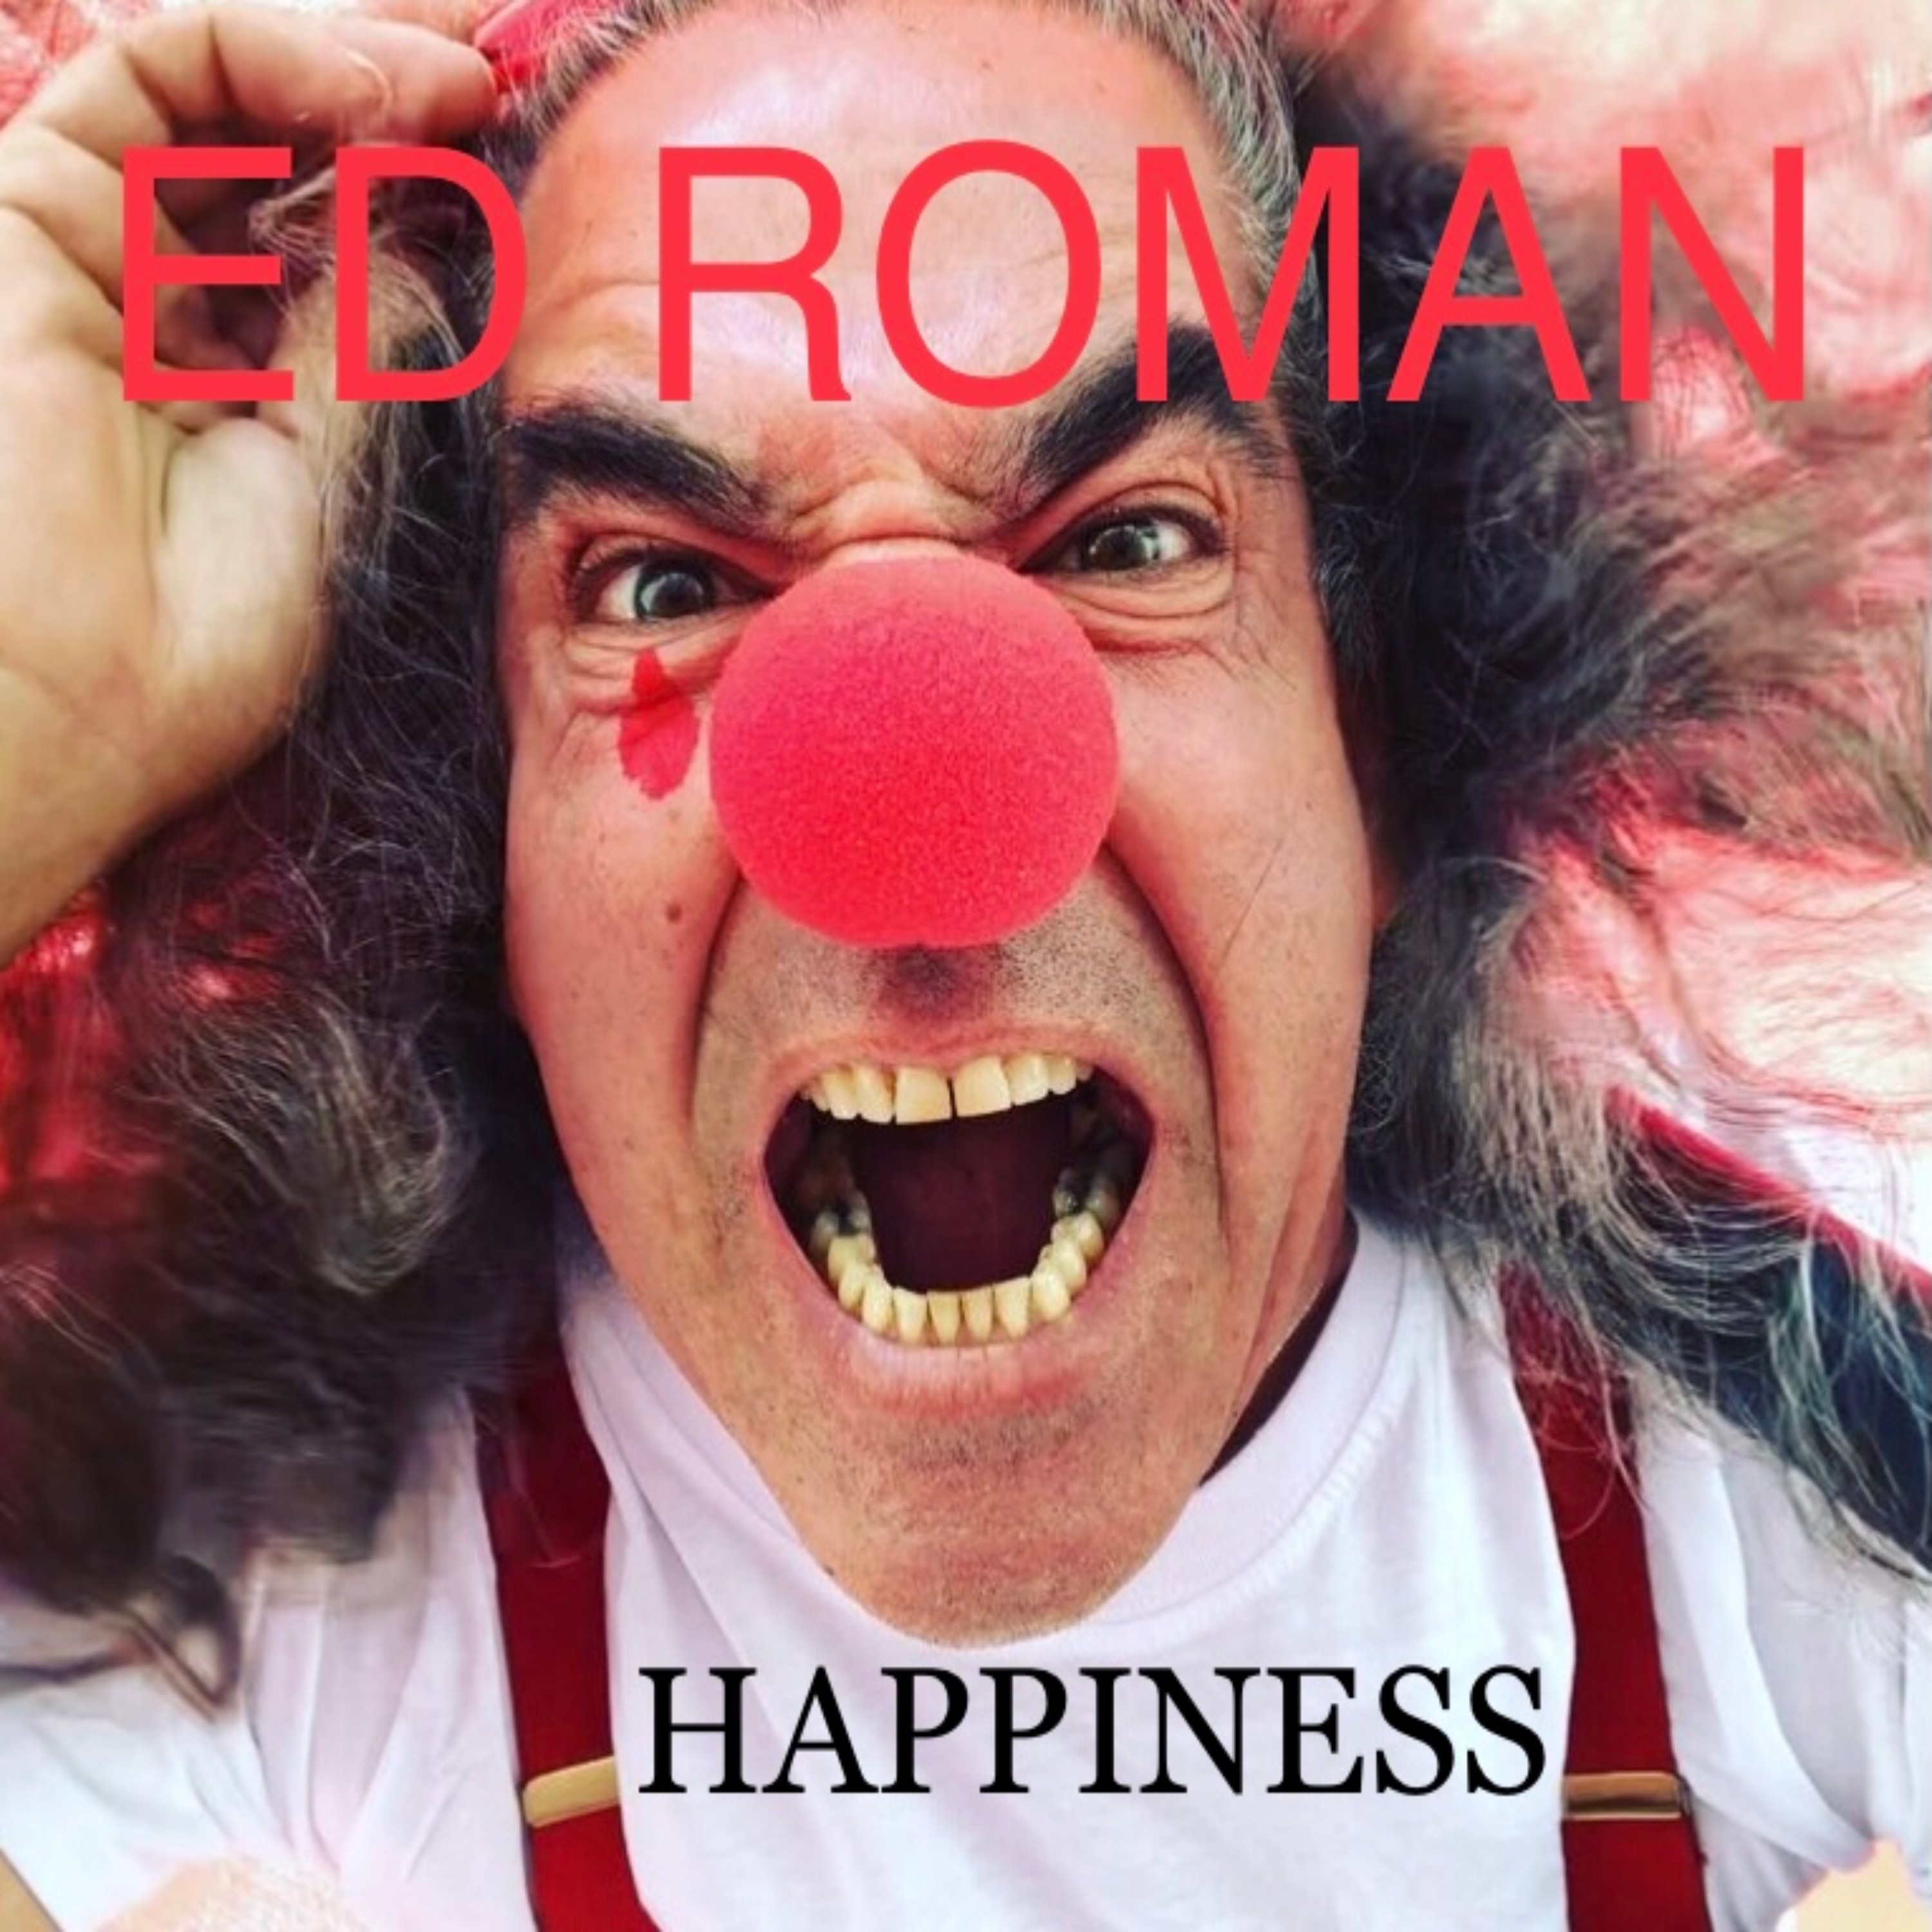 Ed Roman - 'Happiness' (pop rock)